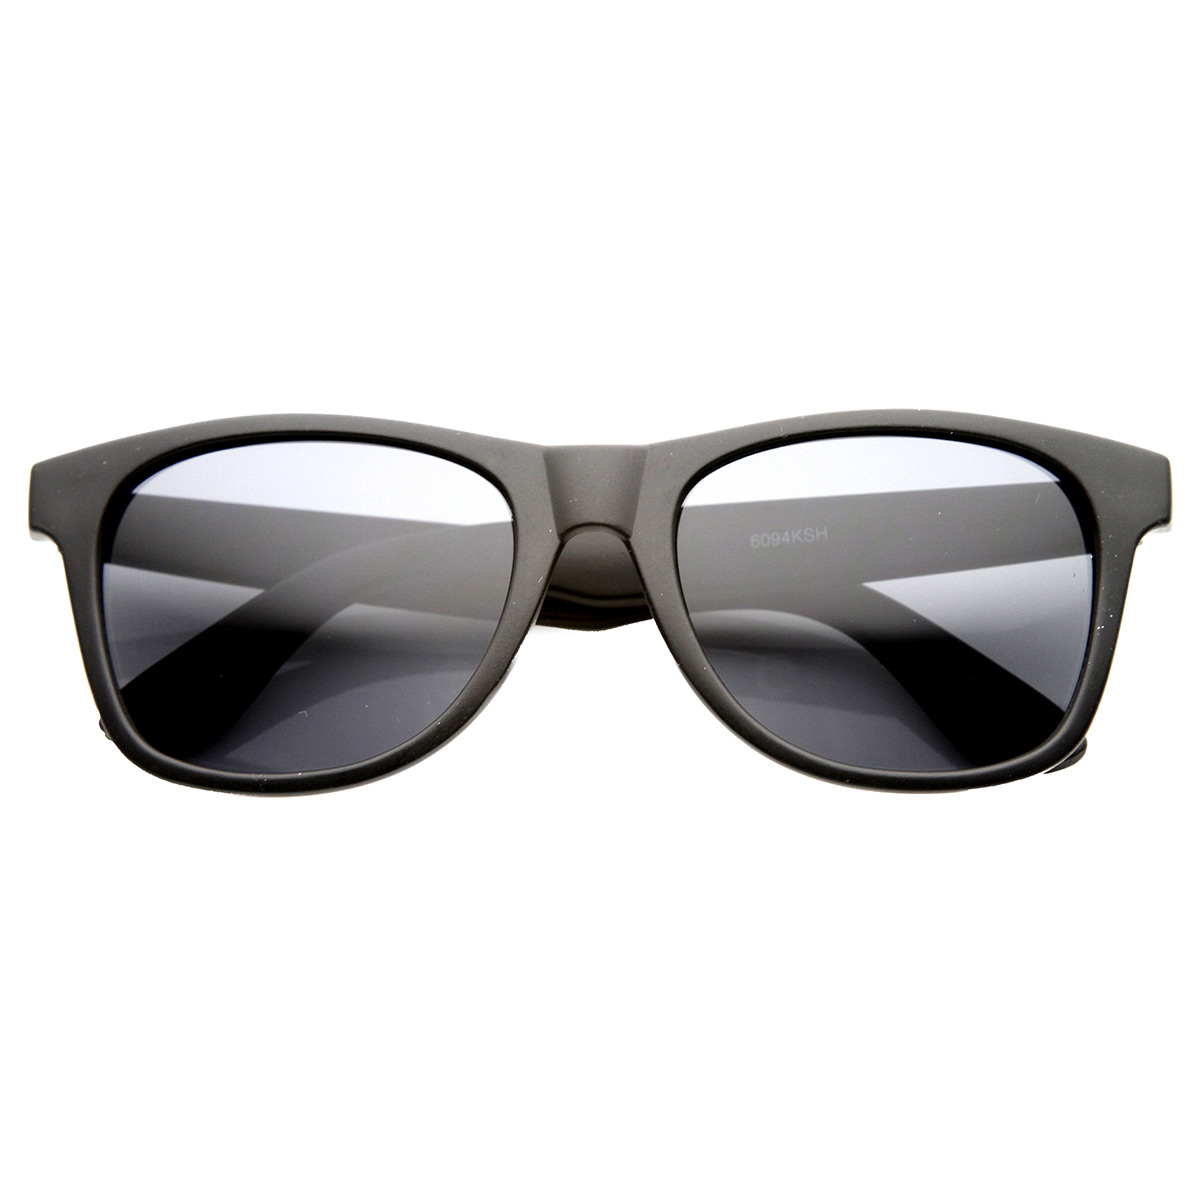 Mens Retro Classic Clean Plastic Horned Rimmed Sunglasses 9654 - Matte-Black Smoke